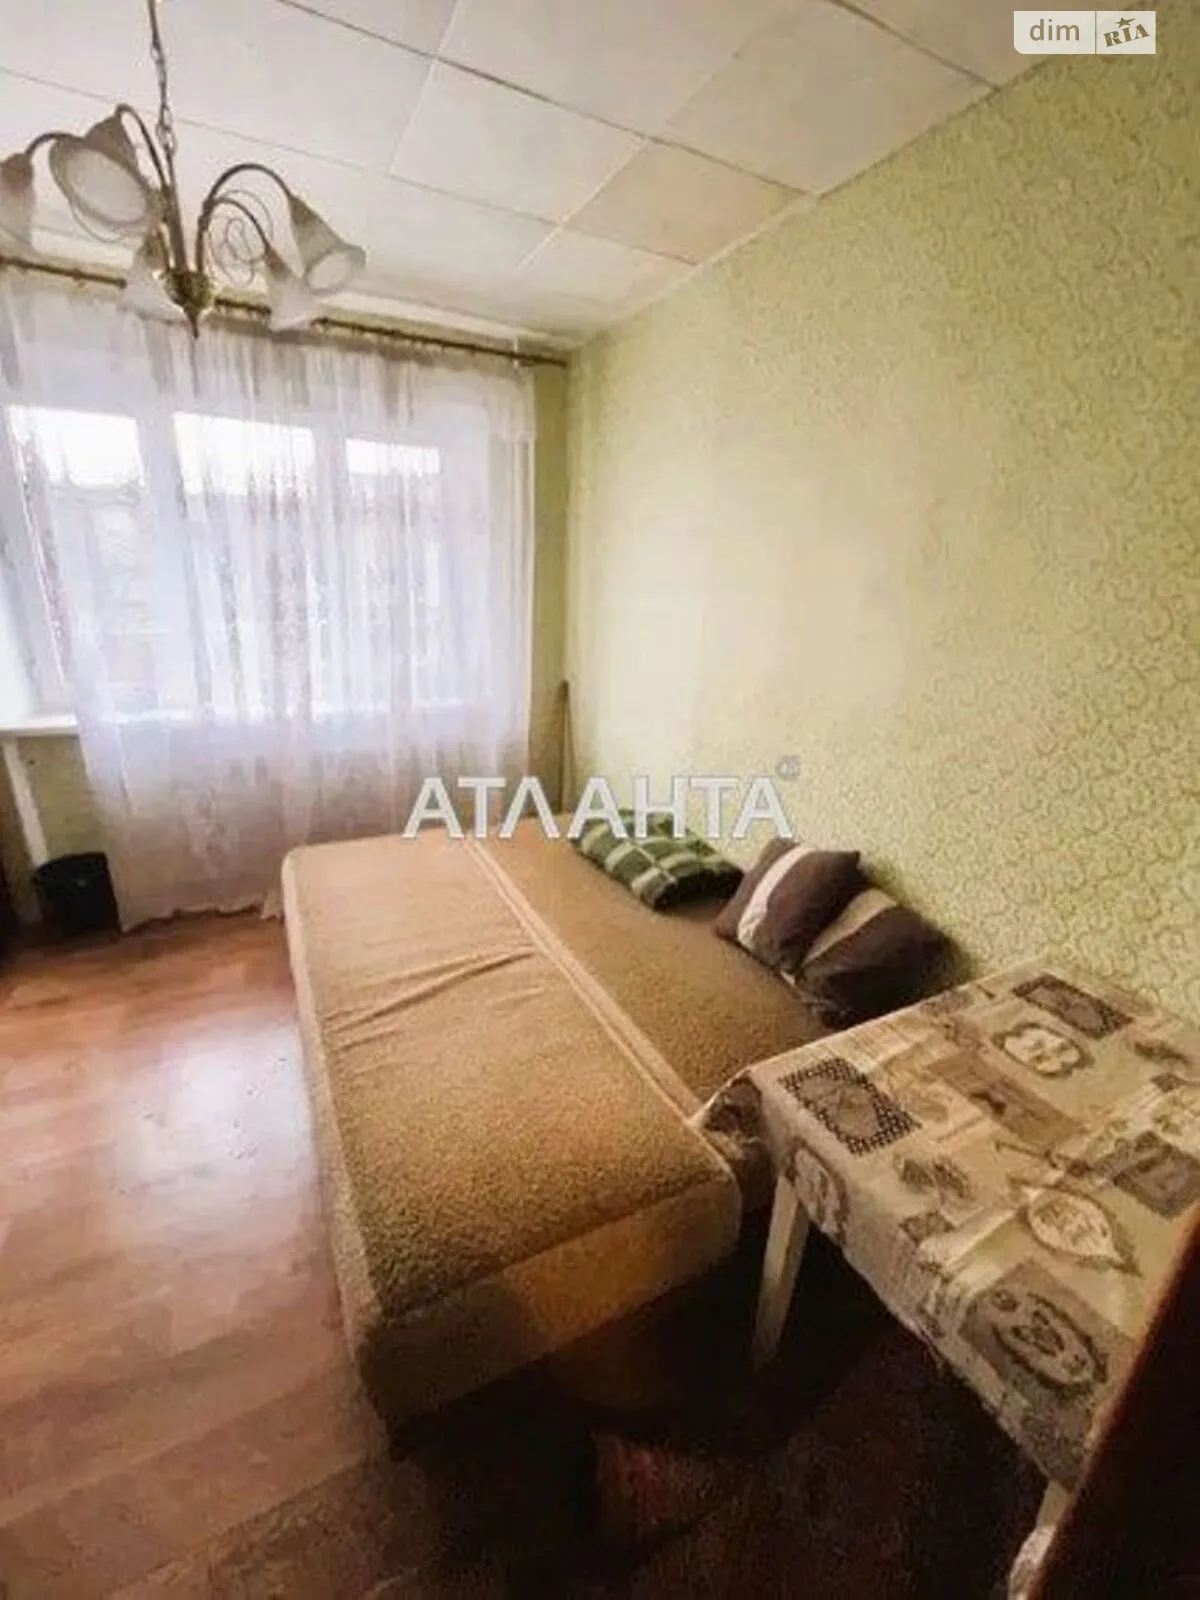 Продается комната 17.7 кв. м в Одессе, цена: 12000 $ - фото 1